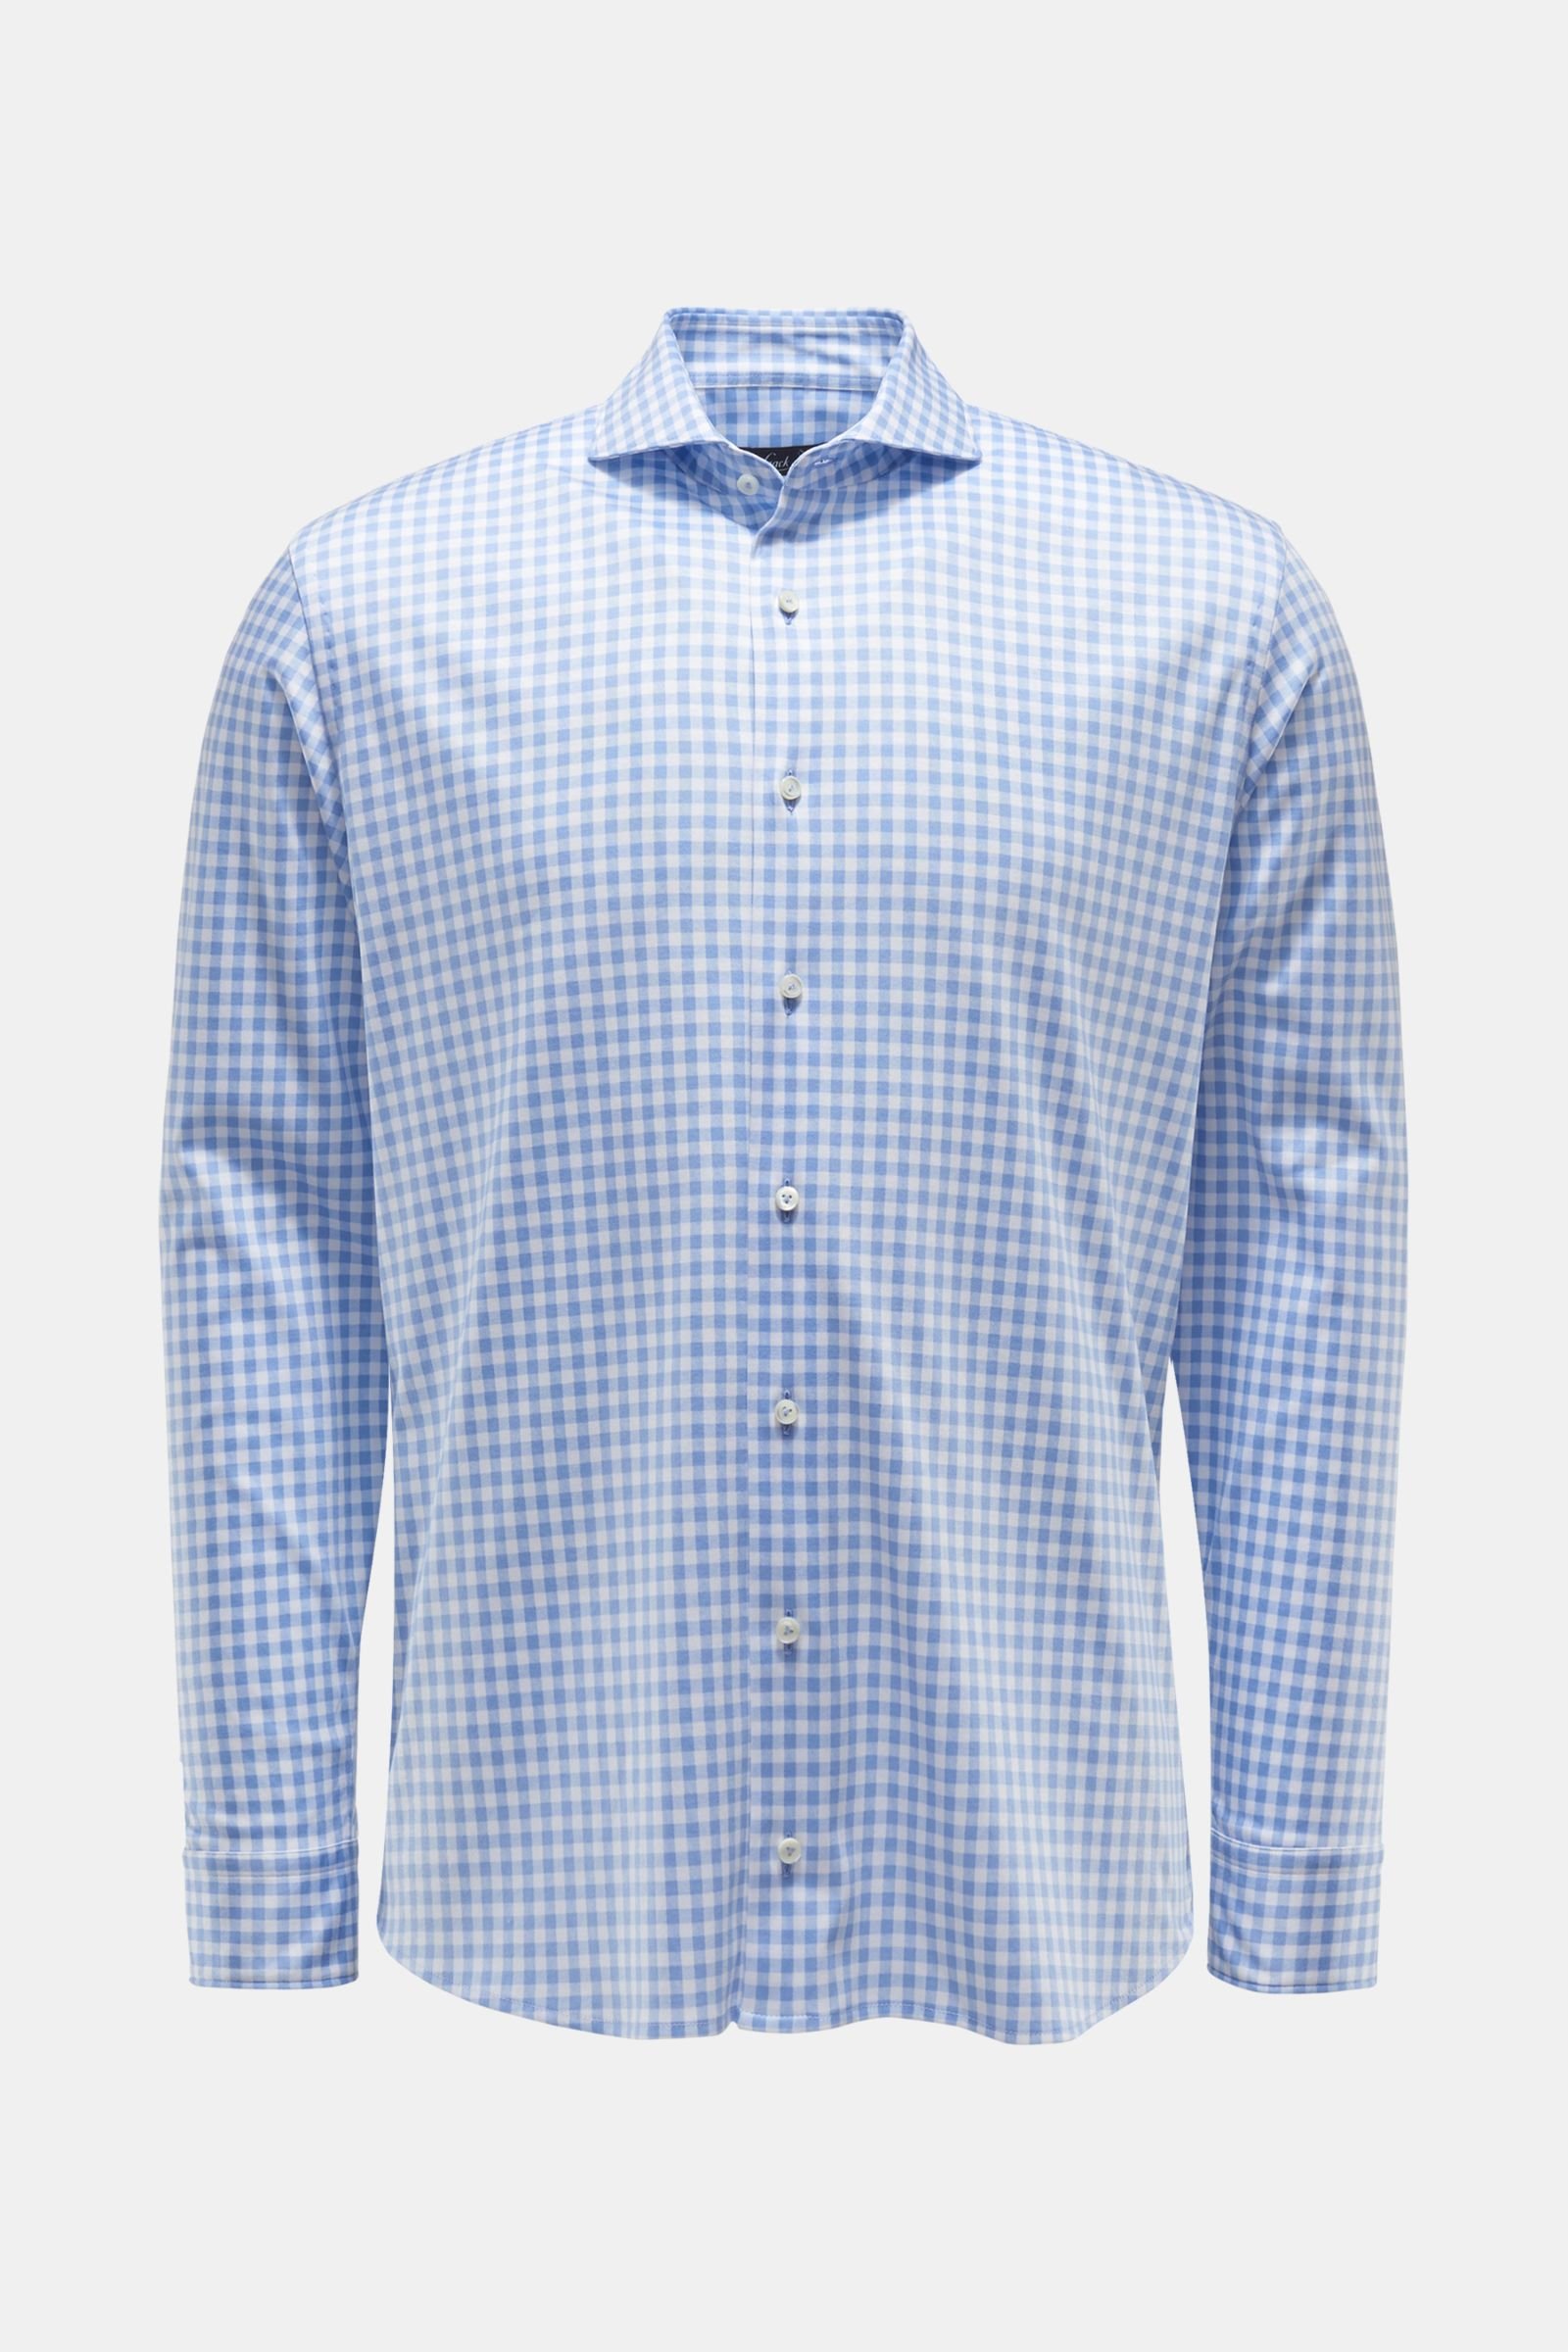 Jersey shirt shark collar 'M-Per-L' light blue/white checked